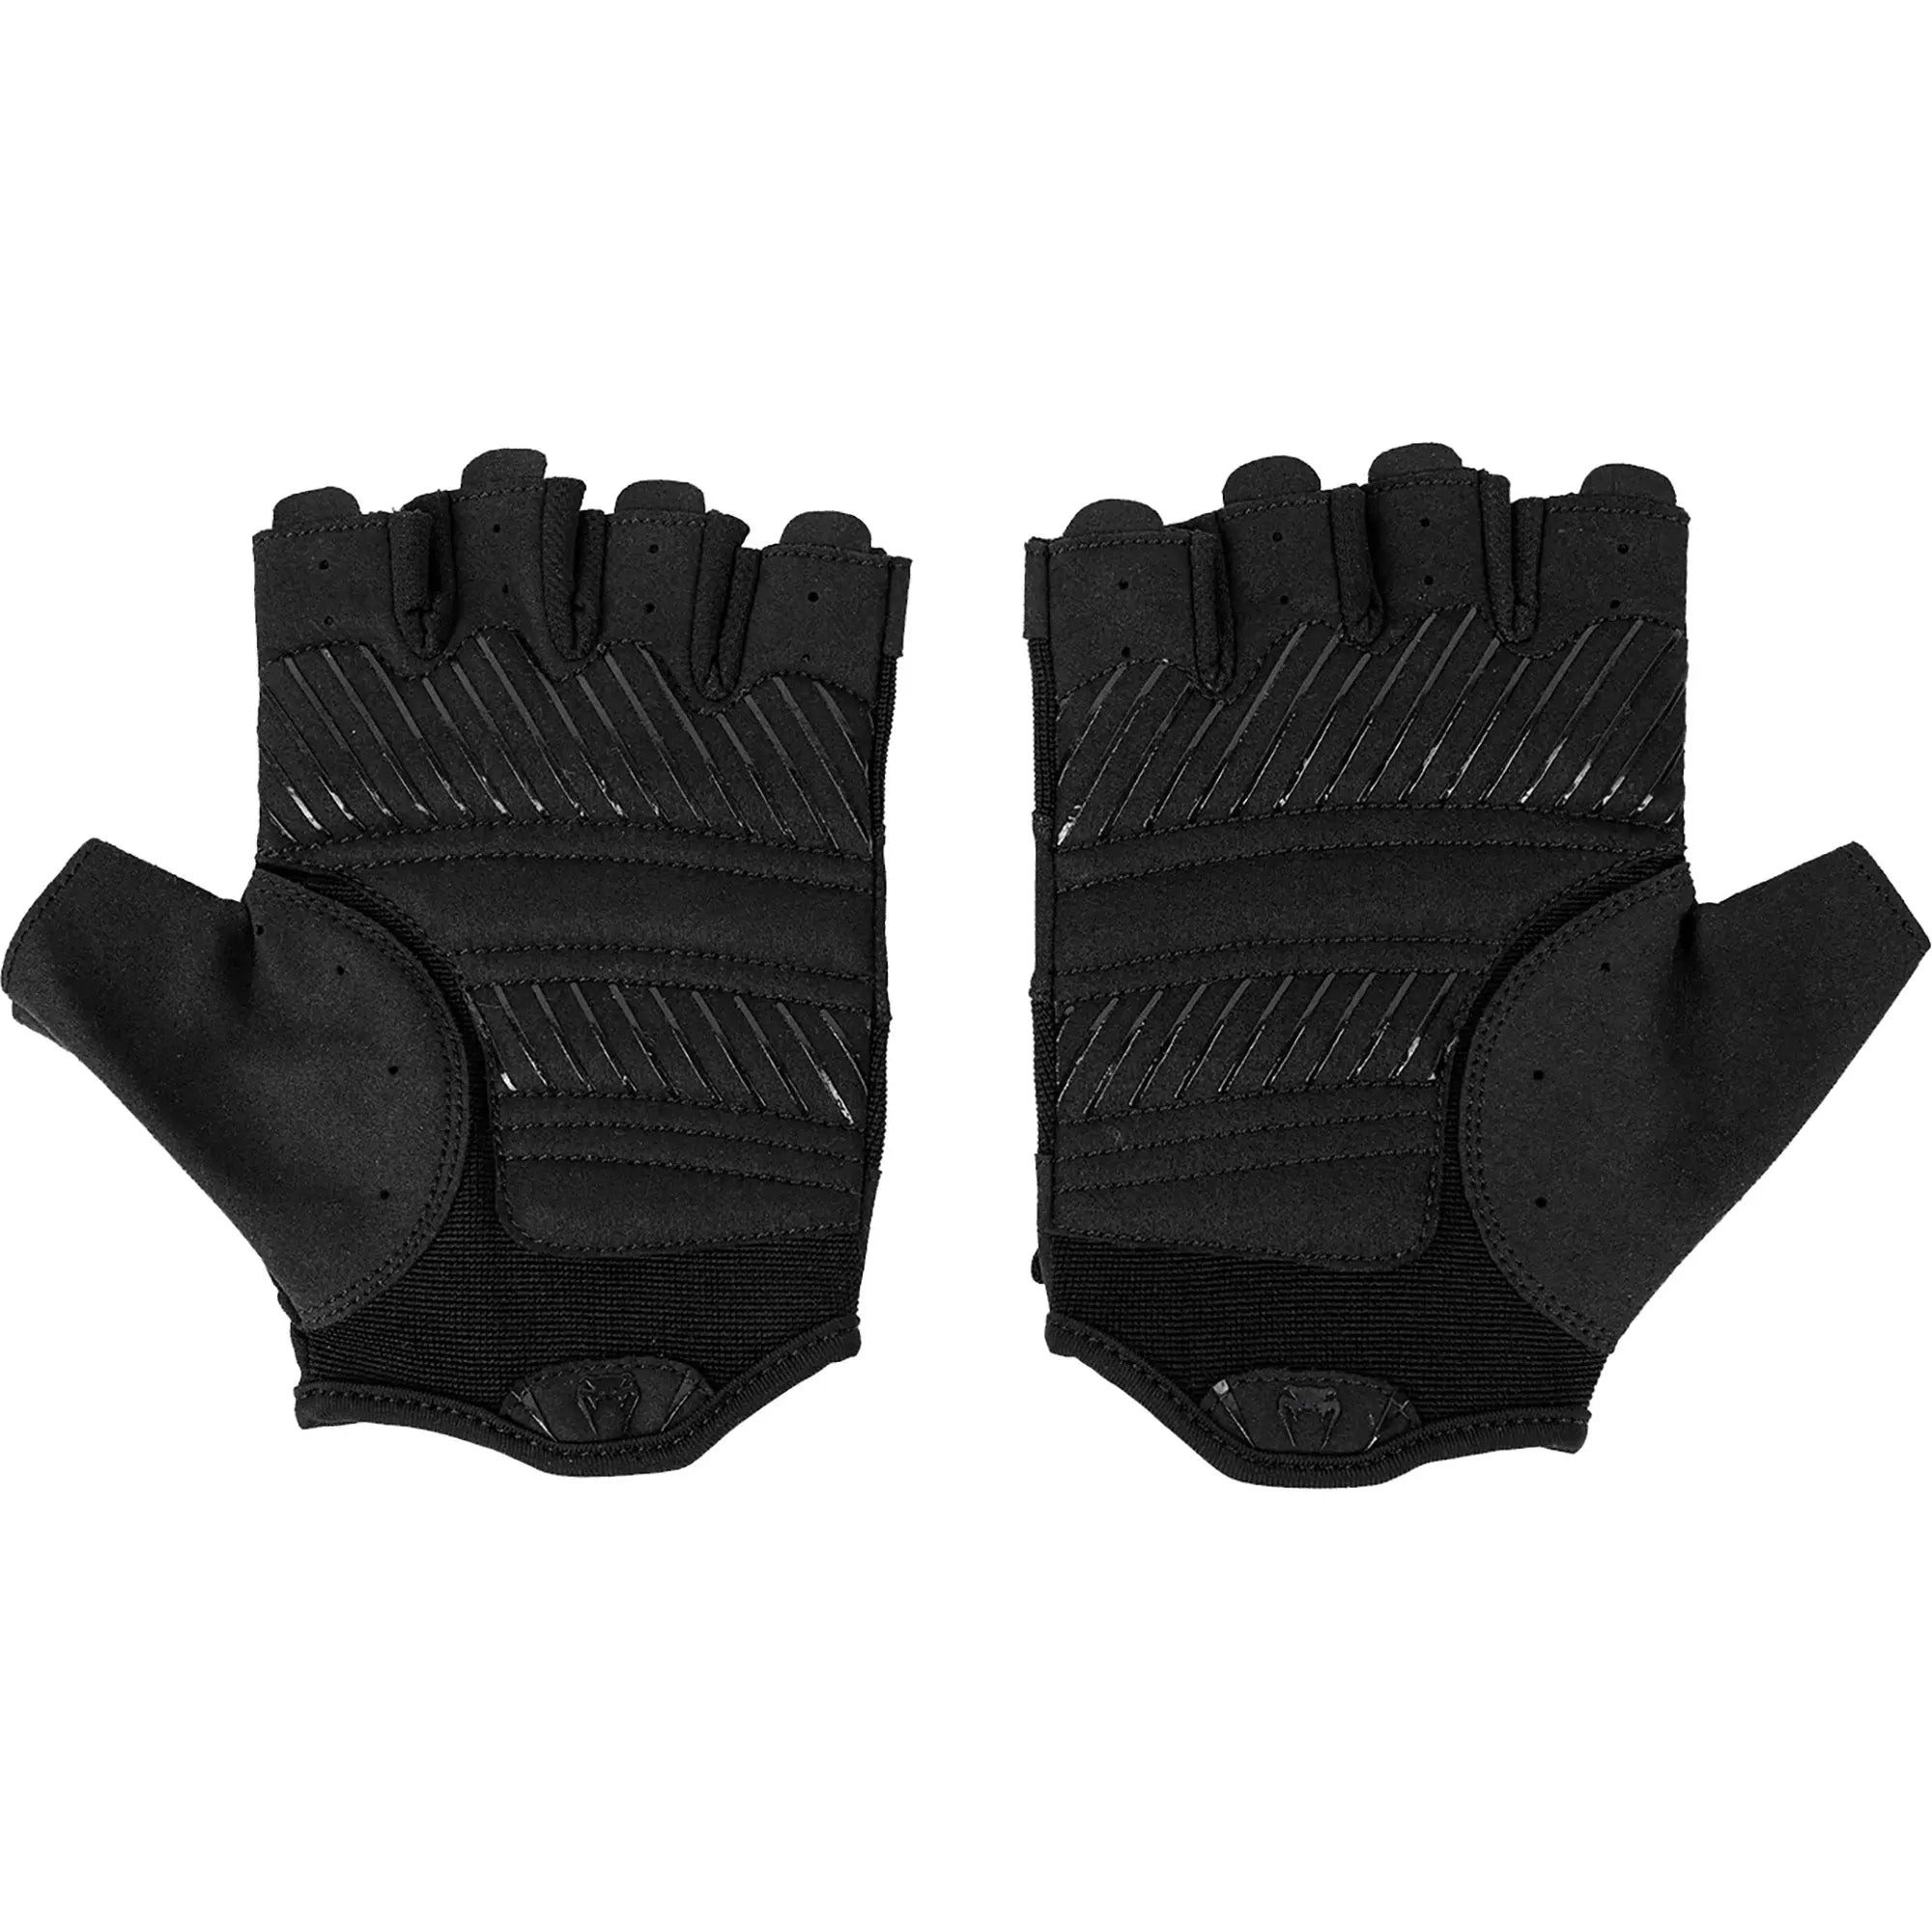 Venum Hyperlift 2.0 Weight Lifting Gloves - Black Venum